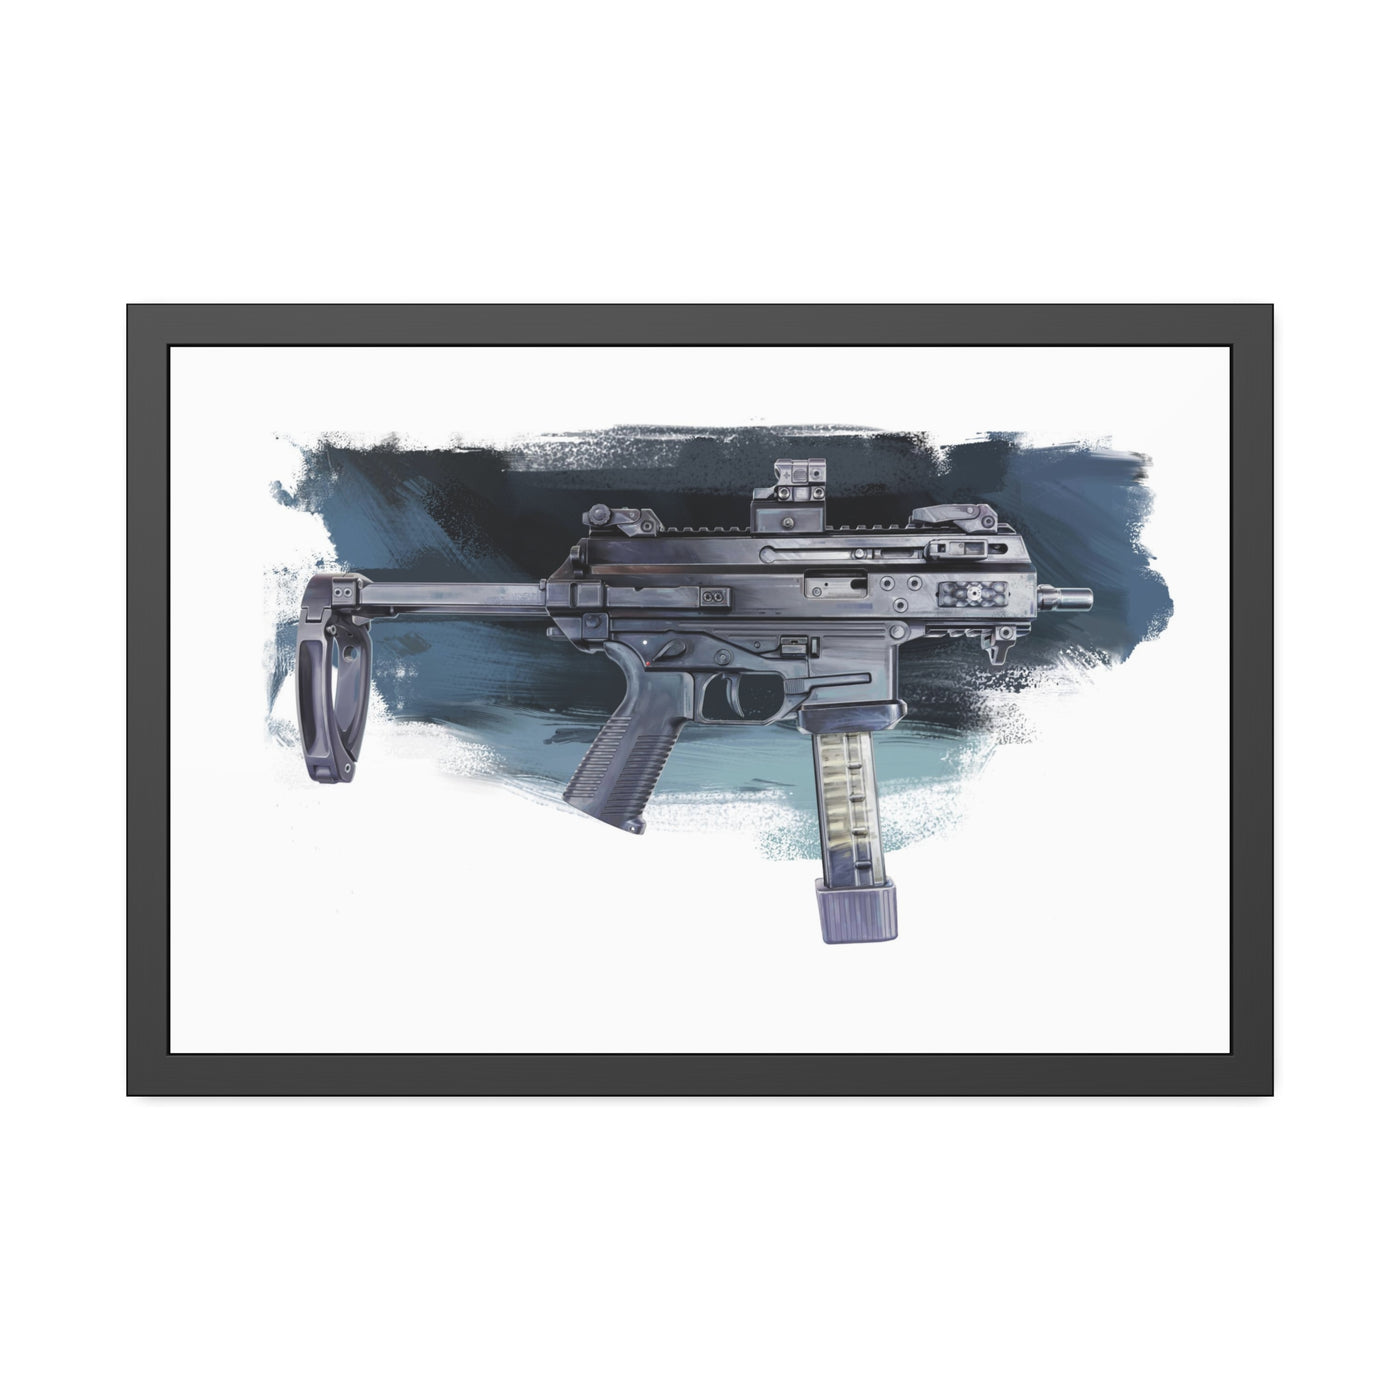 Elite Forces 9mm Carbine Painting - Black Frame - Value Collection